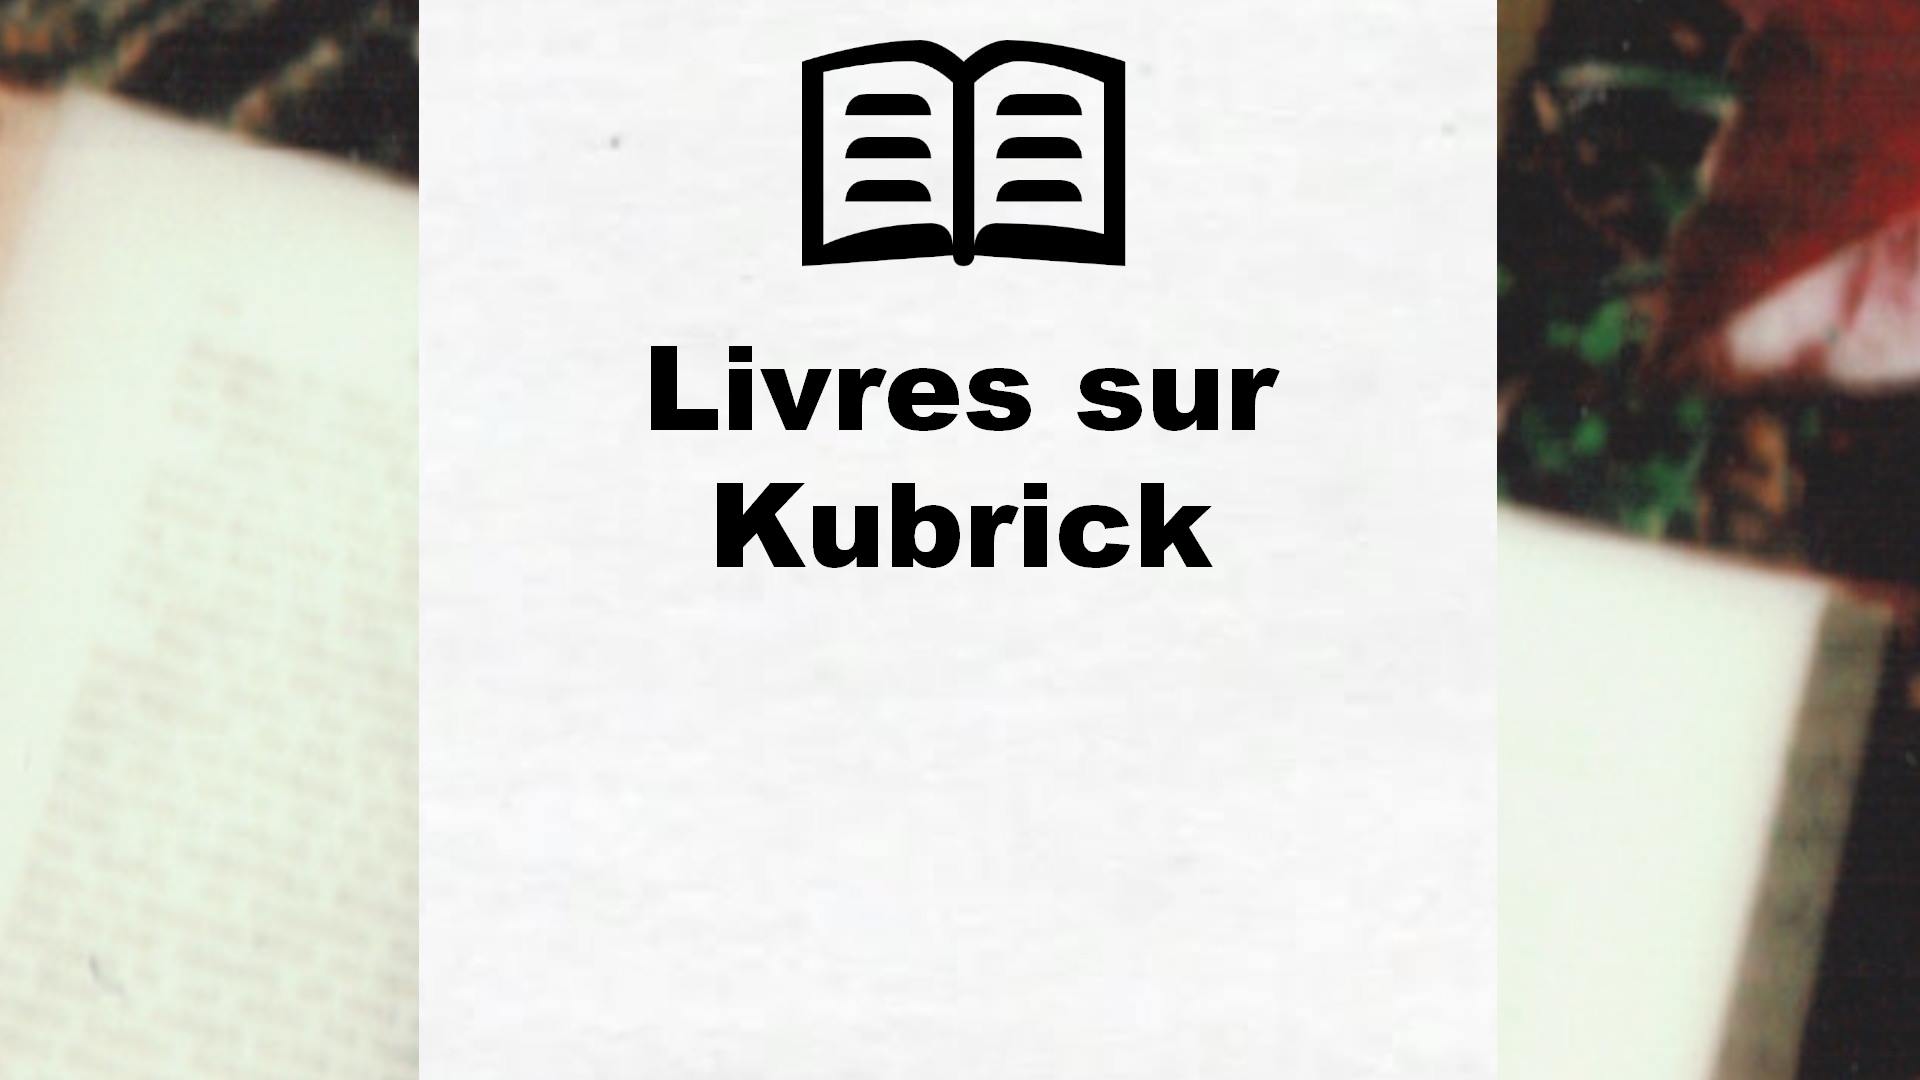 Livres sur Kubrick